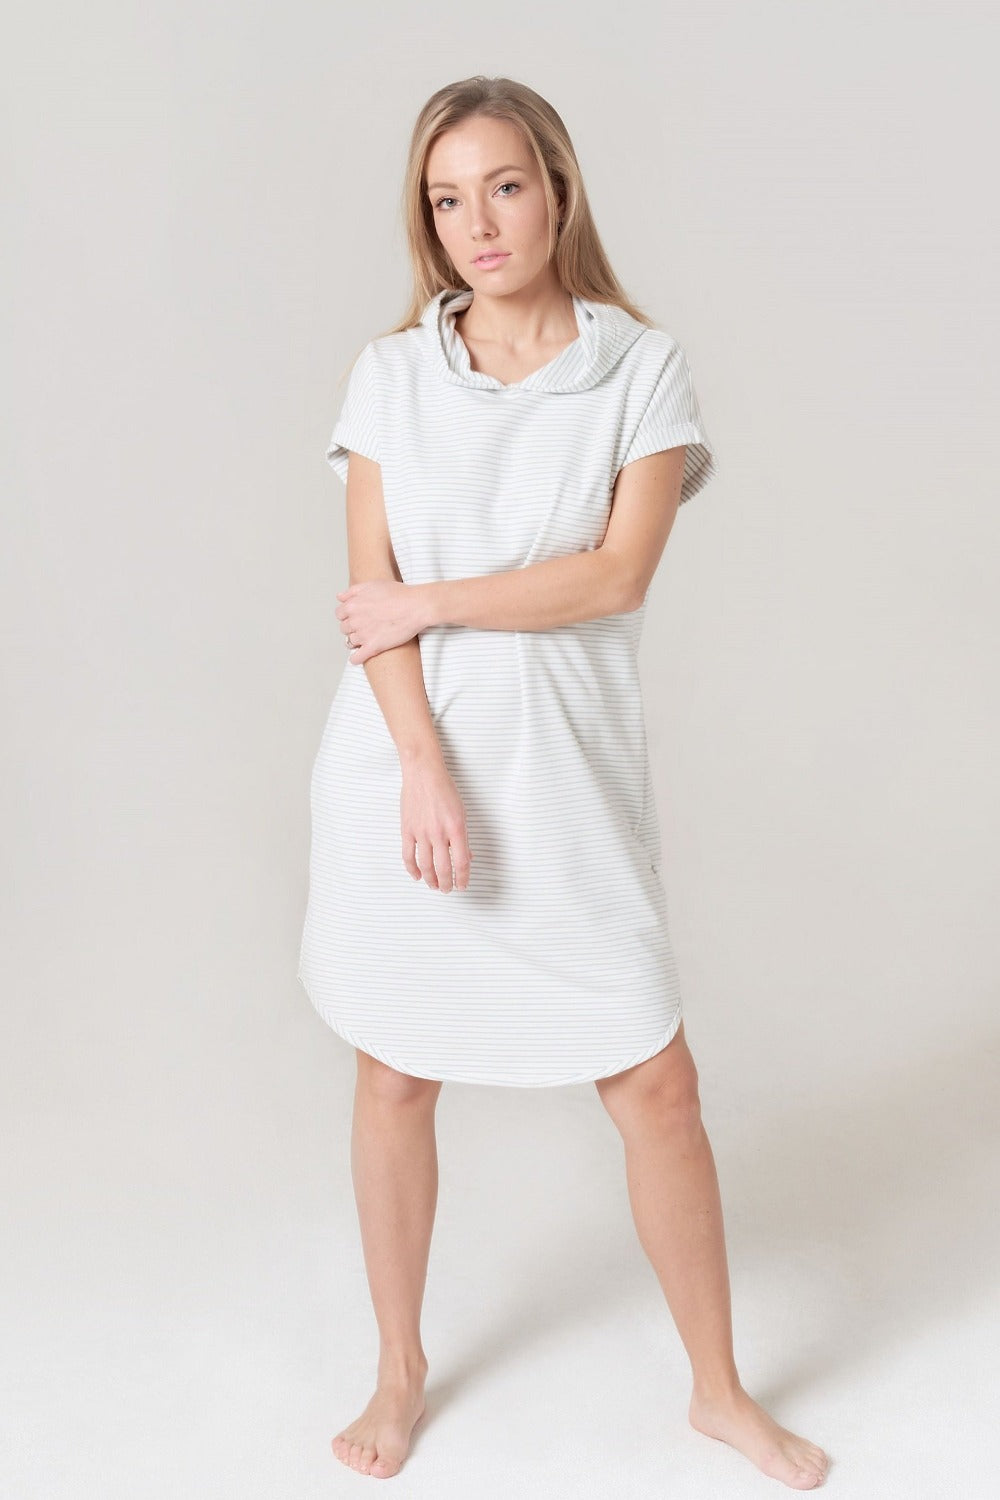 Cotton white dress